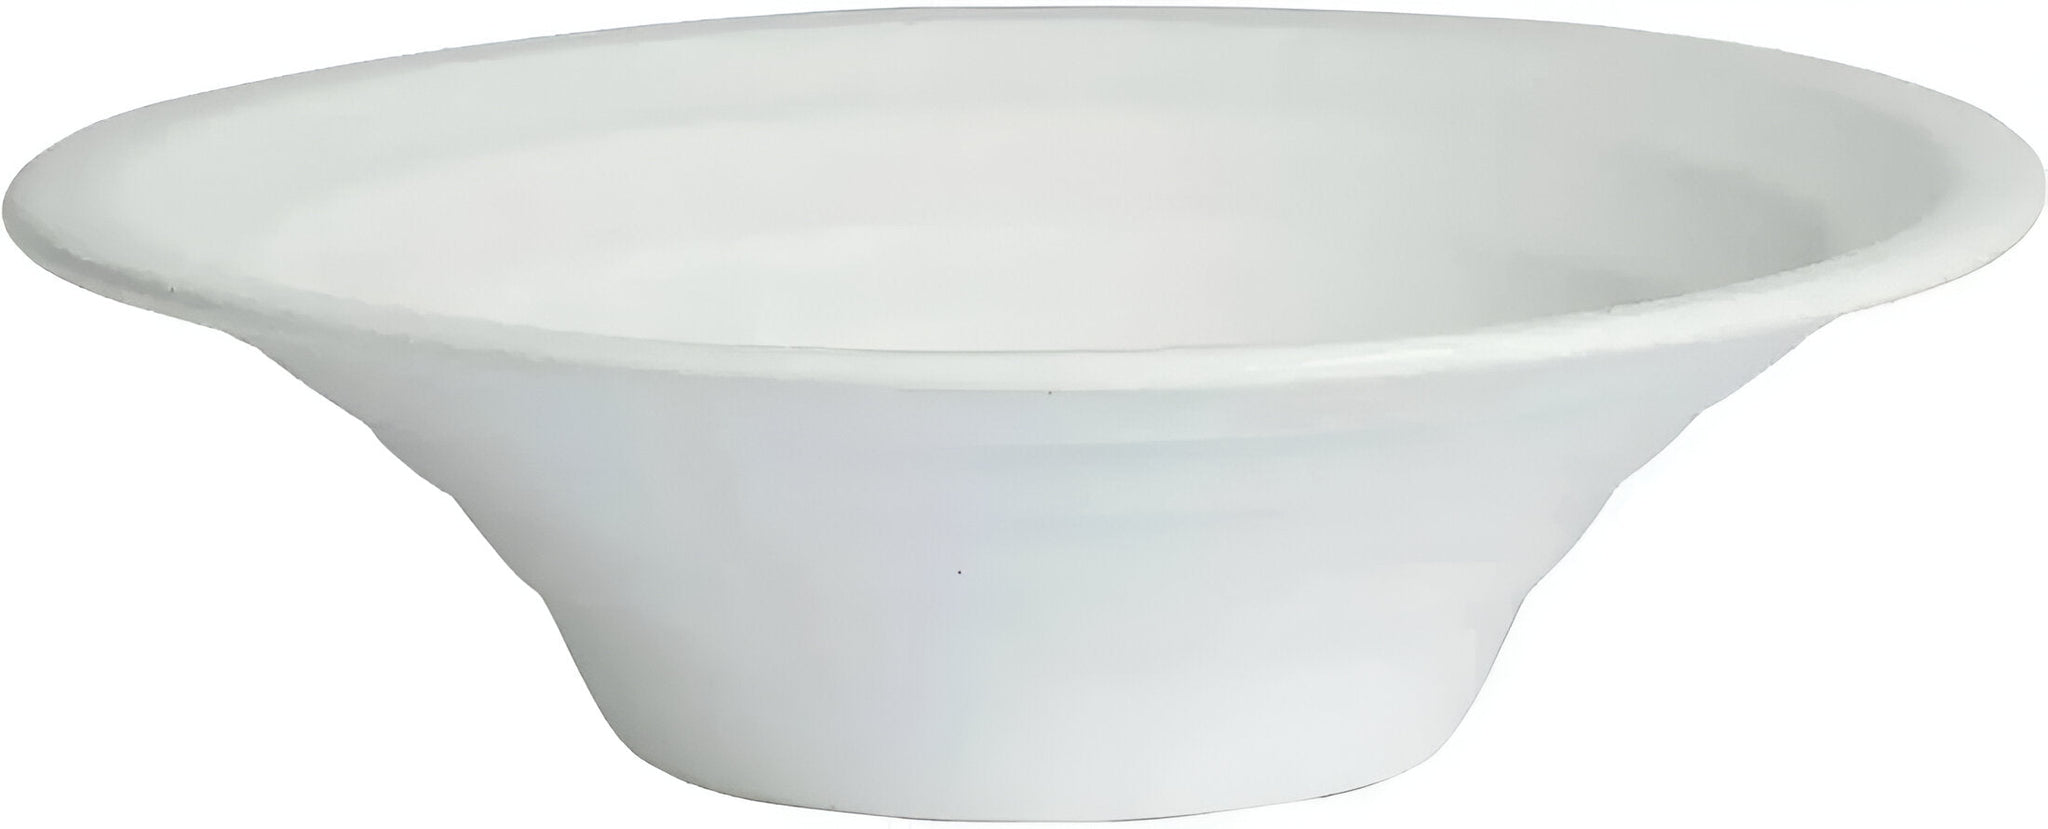 Bugambilia - Mod 86.4 Oz Medium Round White Concentric Deep Bowl With Glossy Smooth Finish - FRD13-MOD-WW